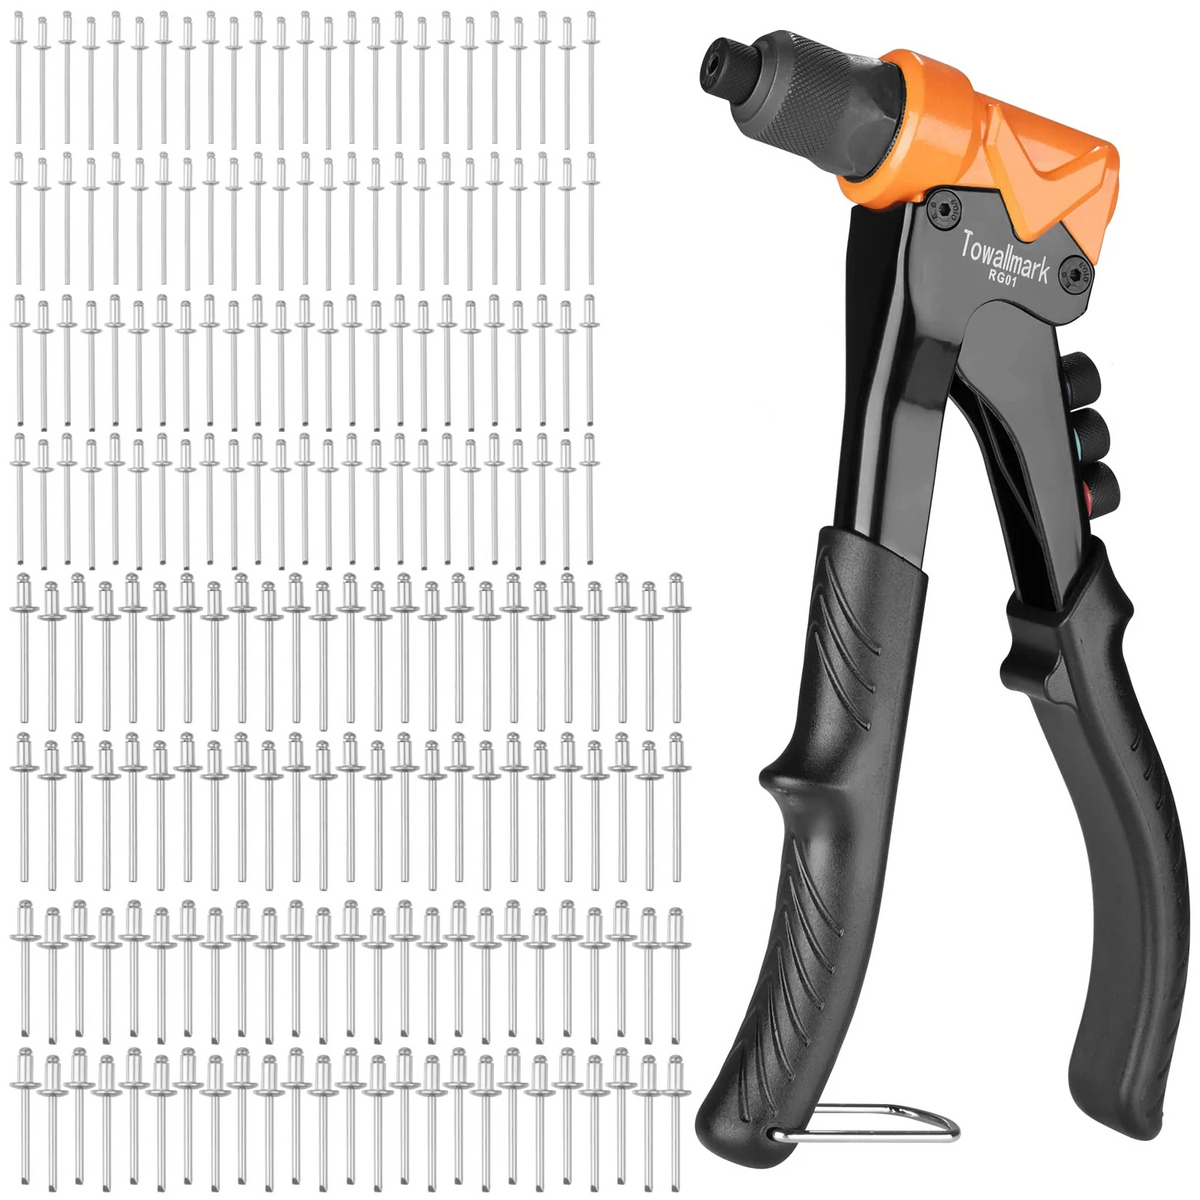 TOWALLMARK Pop Rivet Gun Tool with 200Pcs Rivets Kit for Metal Plastic